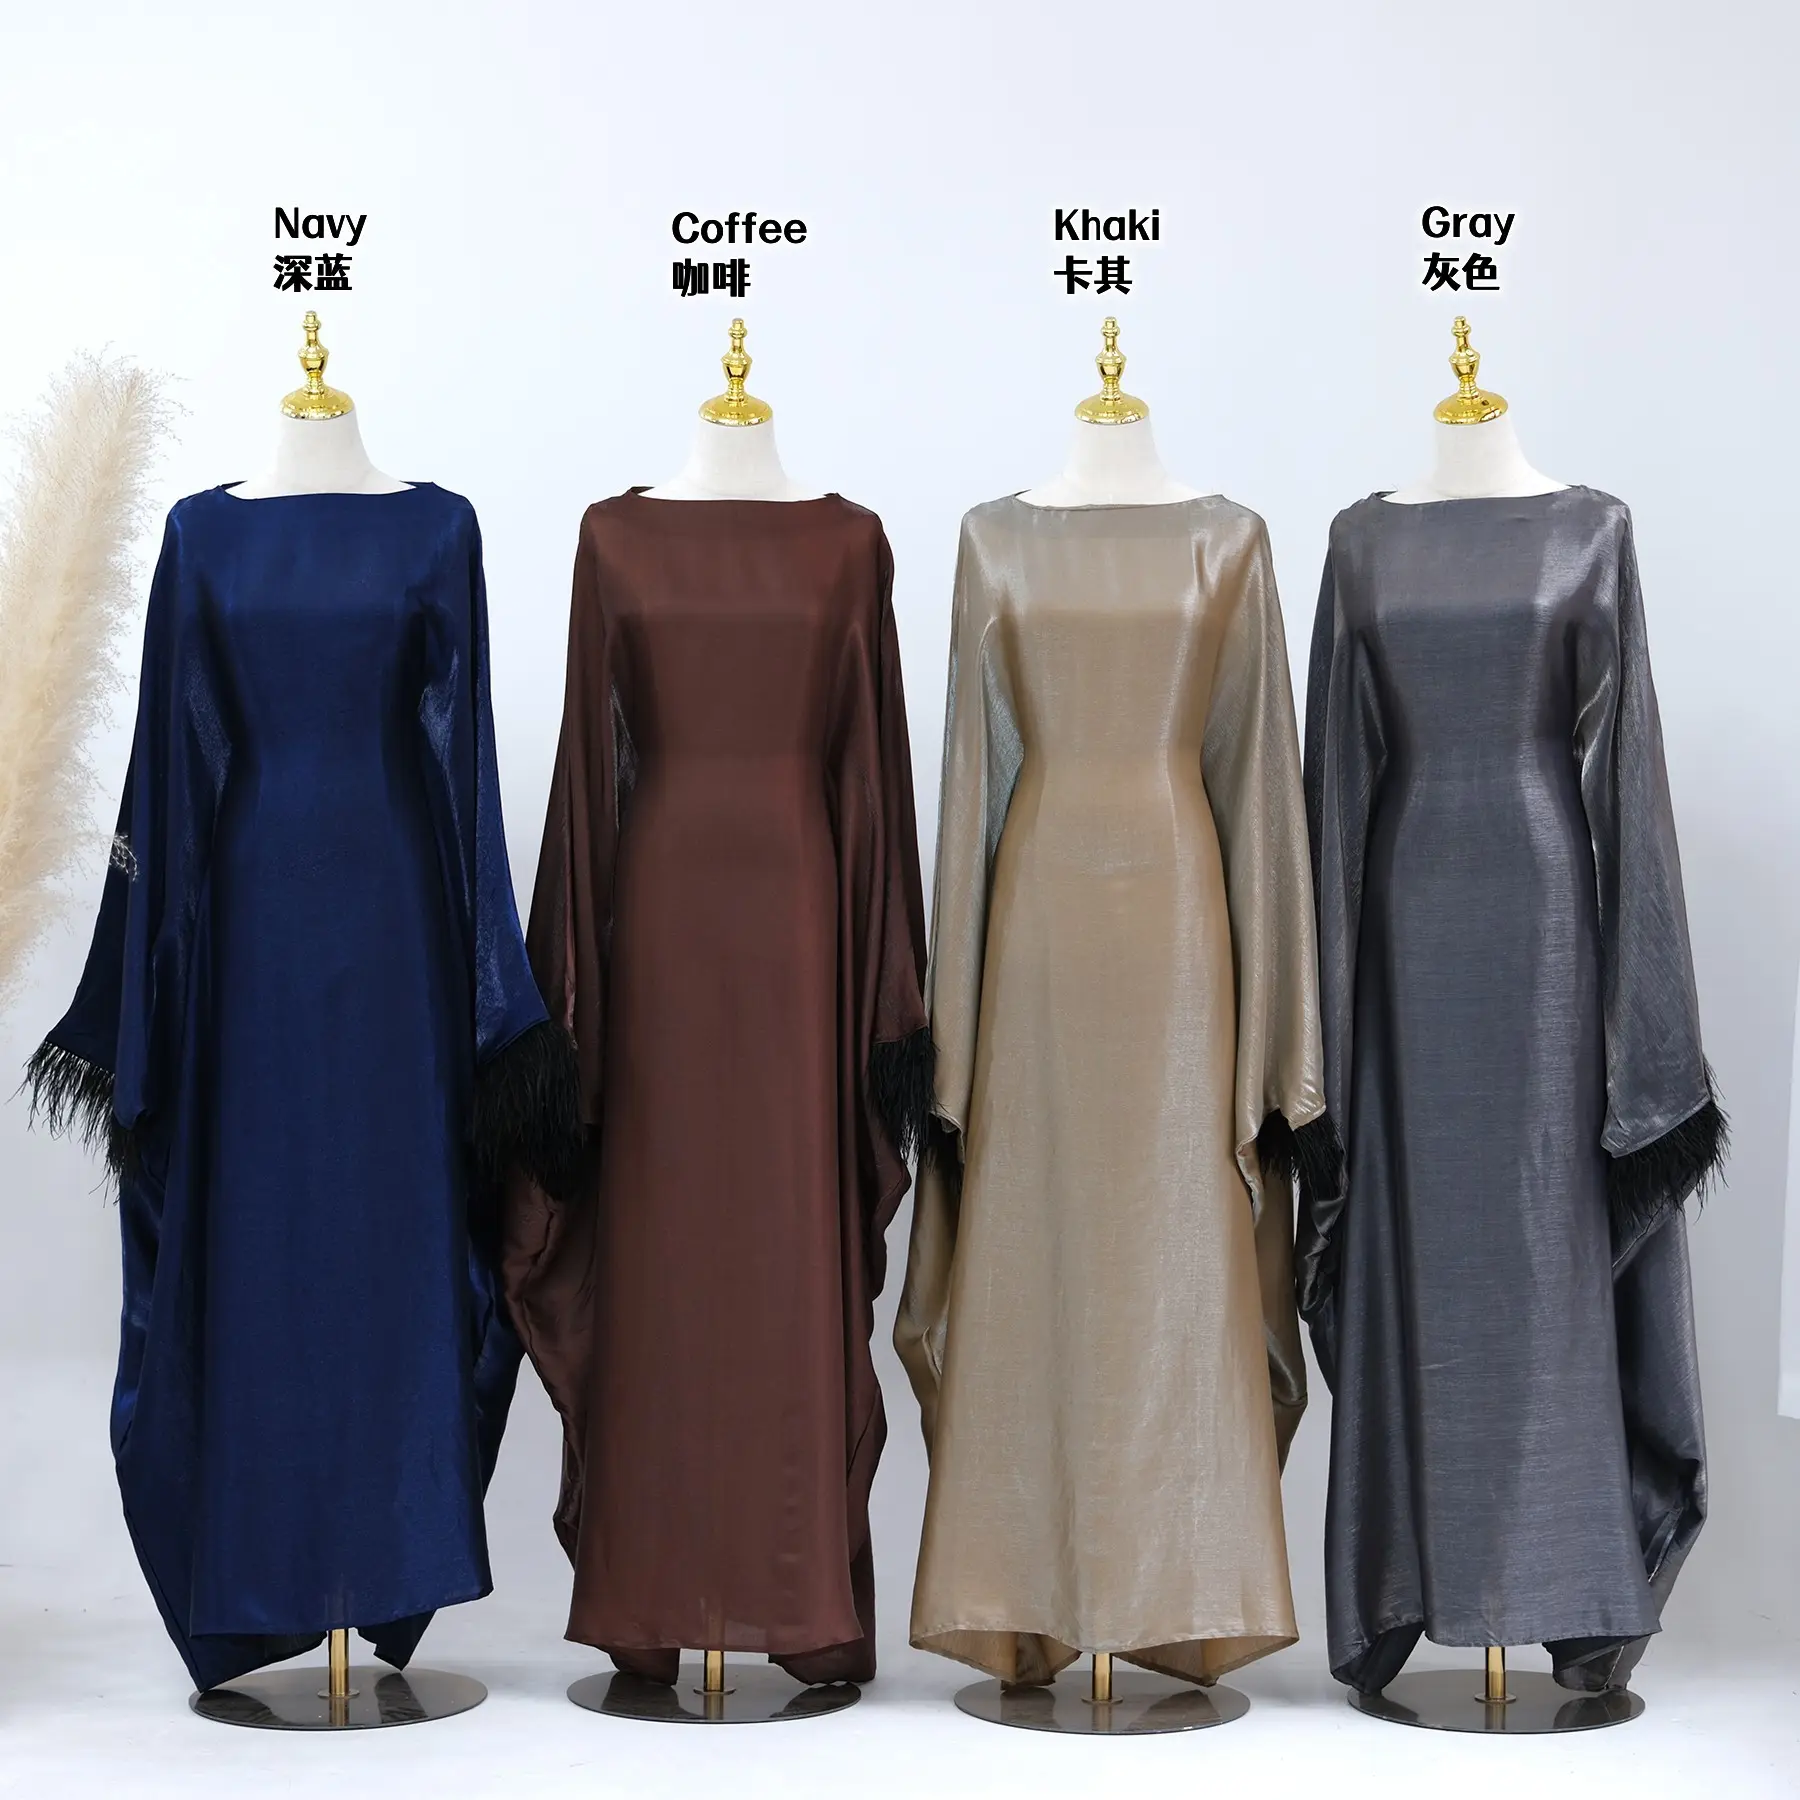 Pakaian Islami gaun wanita Muslim tertutup poliester bersinar gaya Abaya Dubai desain baru dengan sabuk dalam